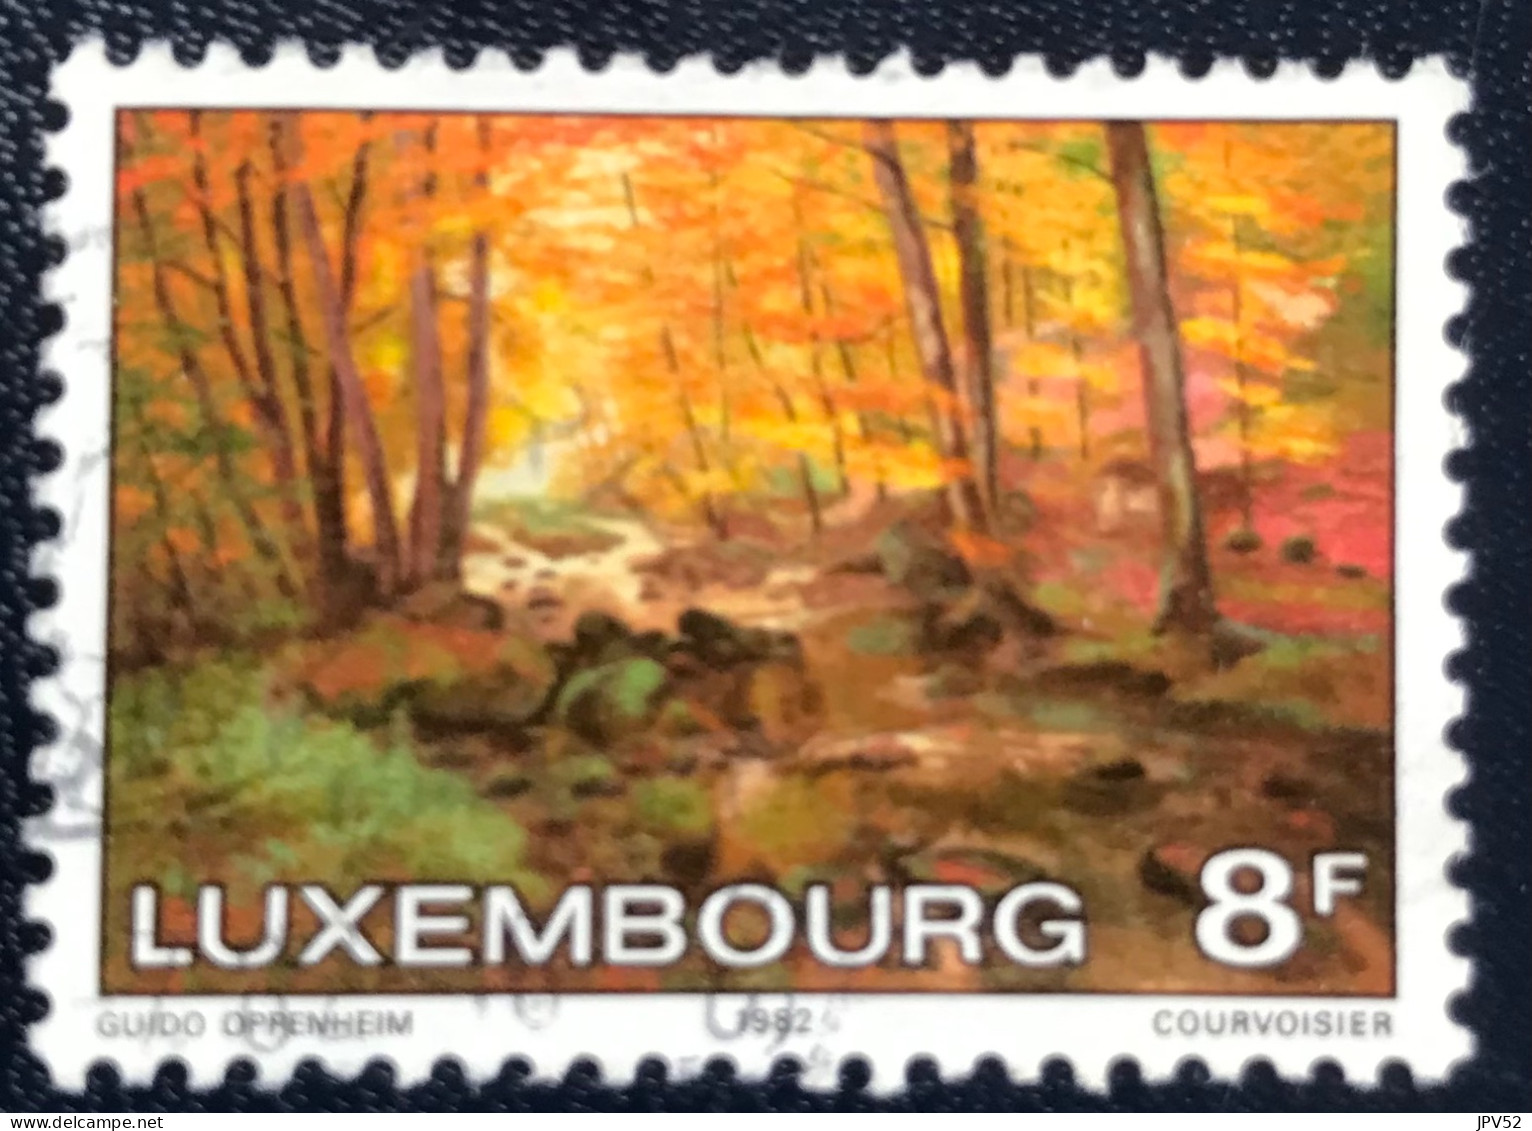 Luxembourg - Luxemburg - C18/31 - 1982 - (°)used - Michel 1048 - Schilderijen - Usados